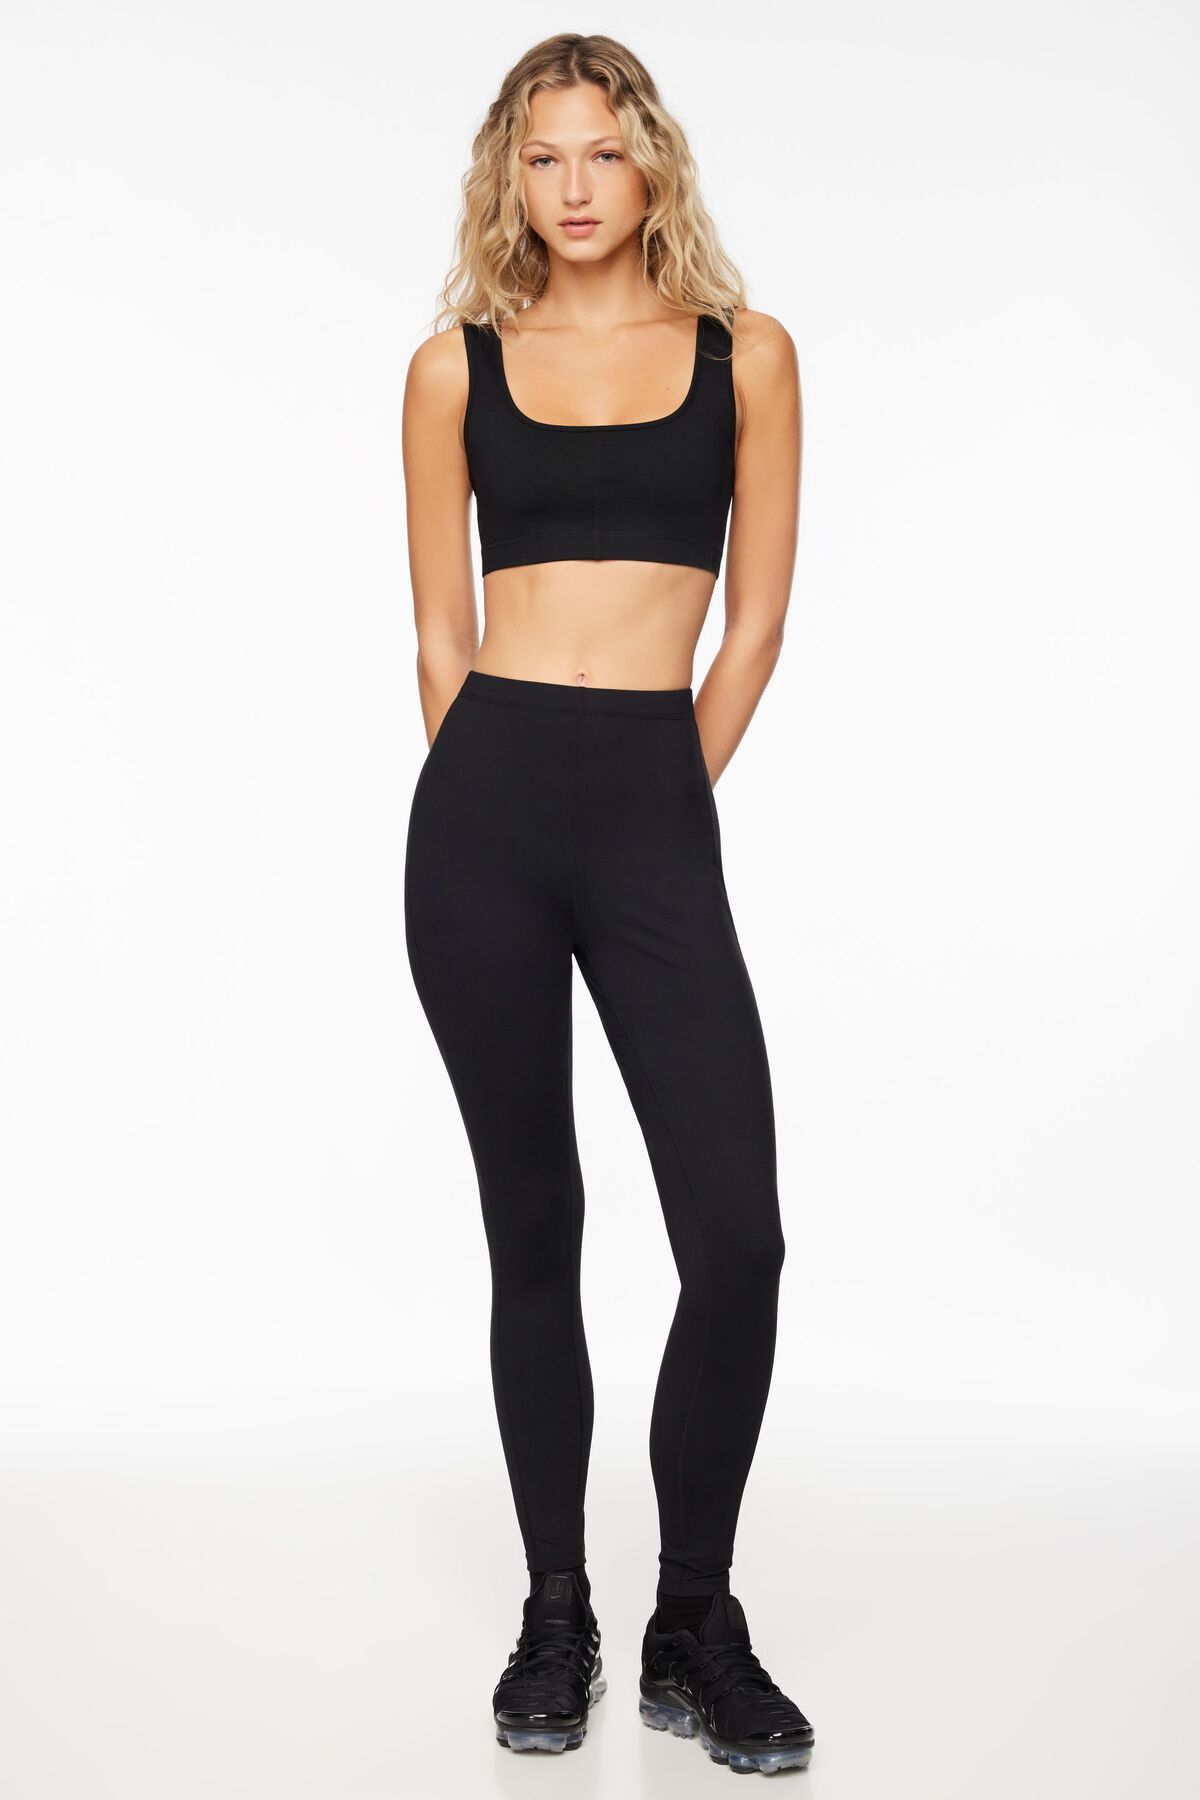 ACTINPUT Black Leggings for Women Soft High Waisted Tummy Control Leggings  Sports Workout Gym Running Yoga Pants(Black,S-M) : : Fashion